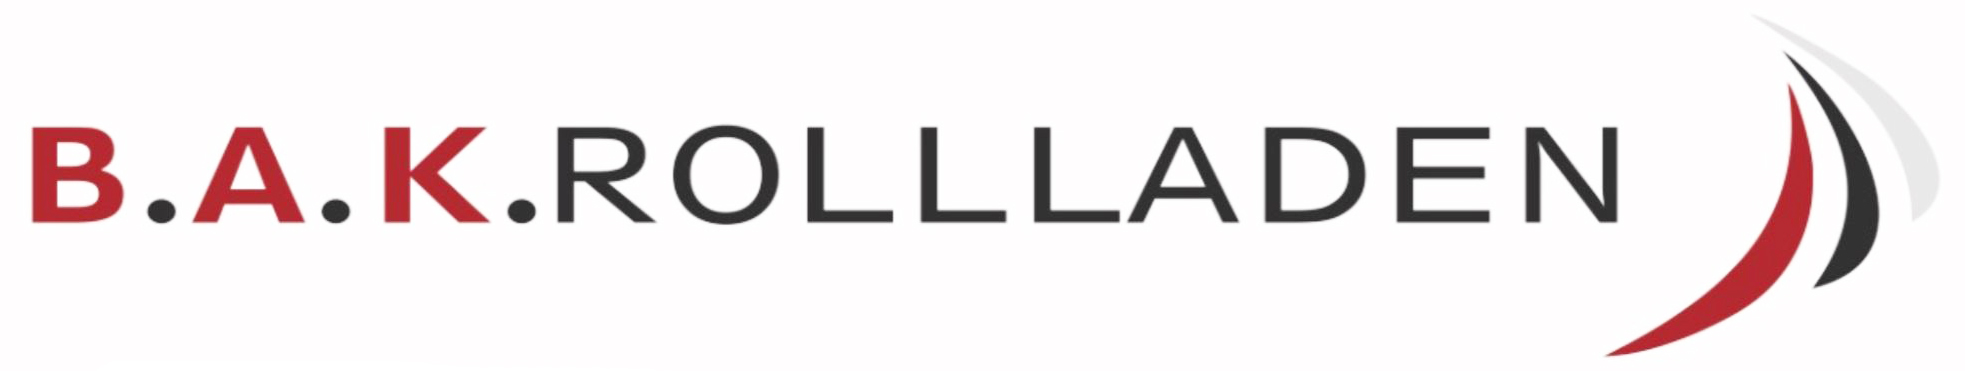 Rollladen Software - Firma B.A.K. Rollladen - Logo